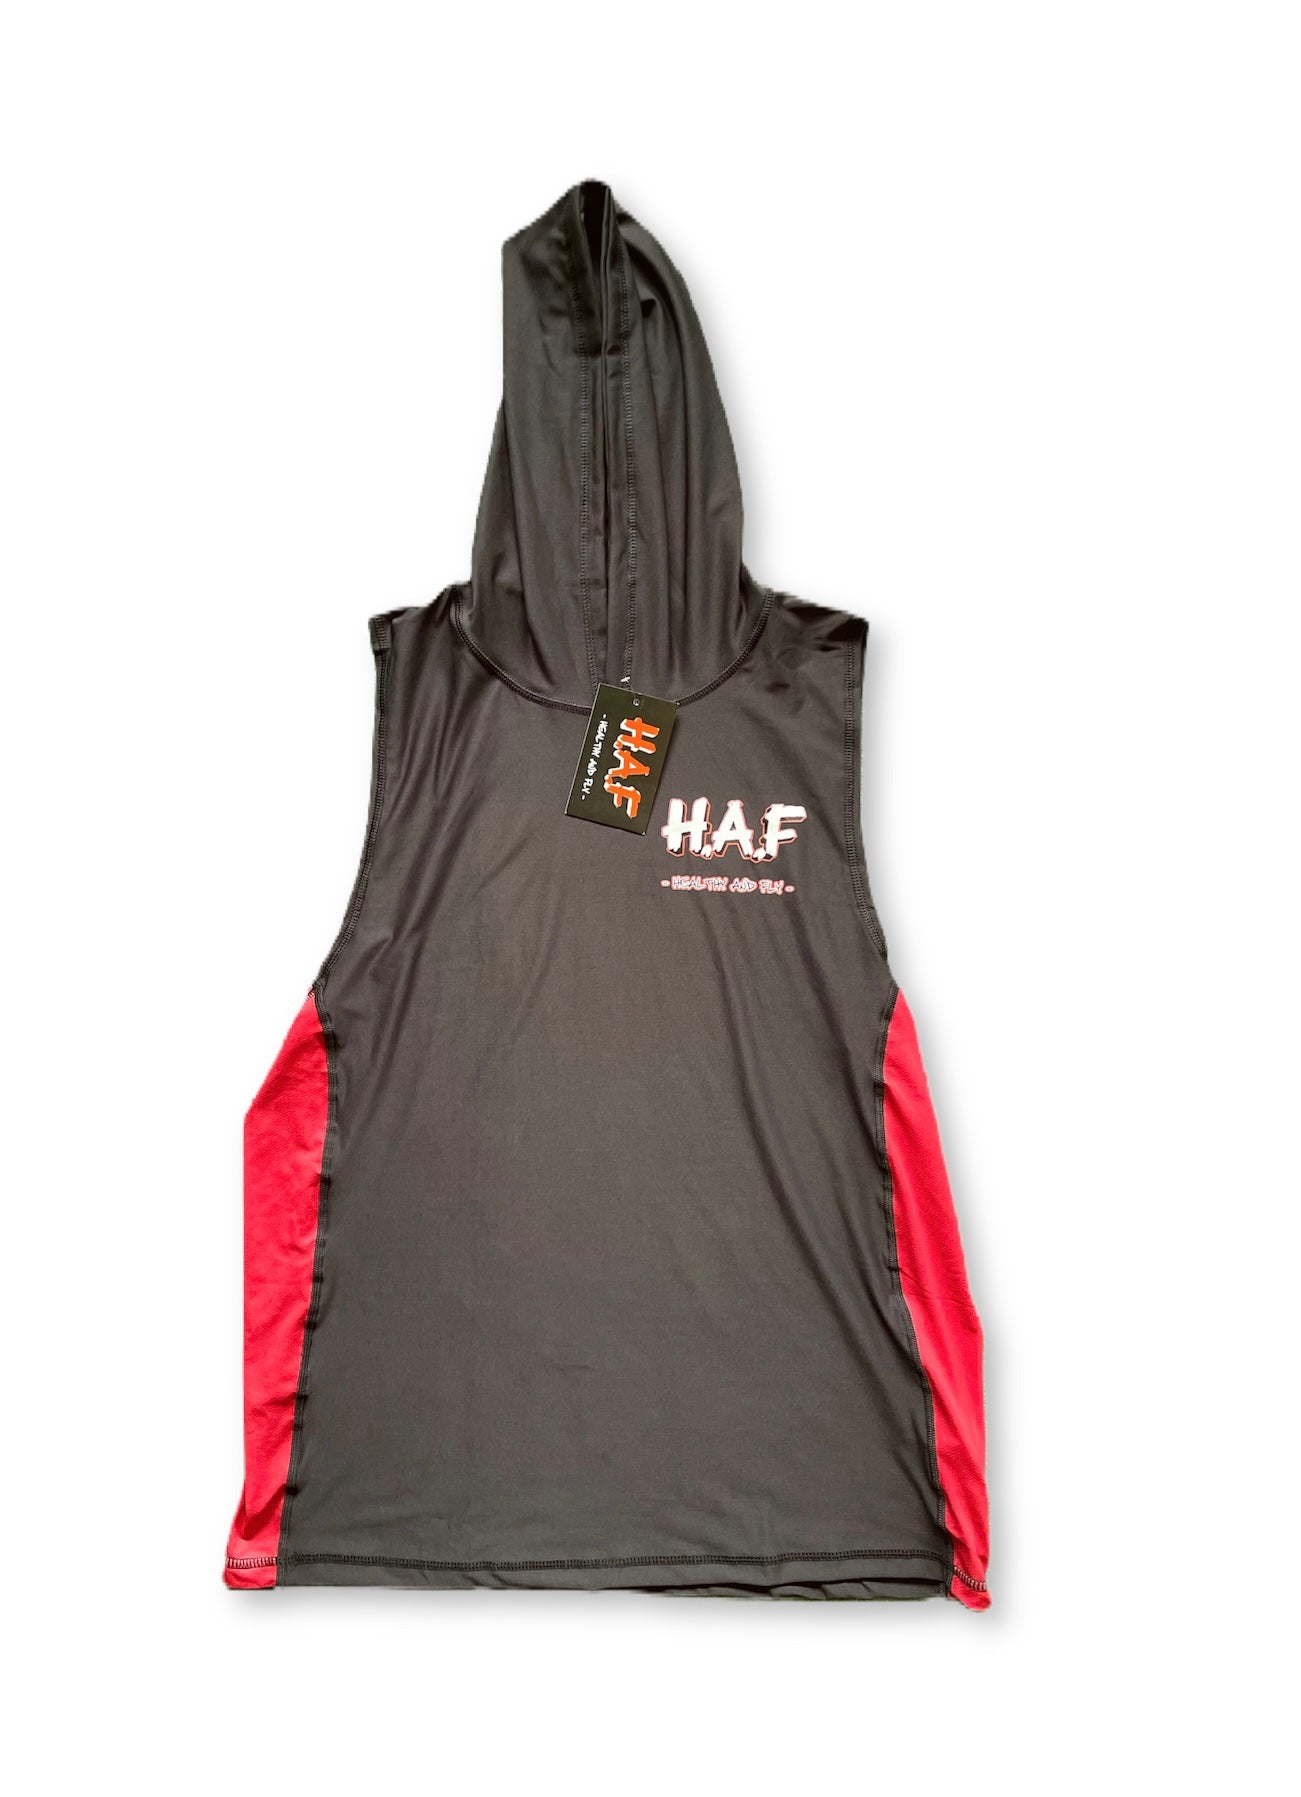 HAF Sleeveless Hoodie  Gym Tank Top